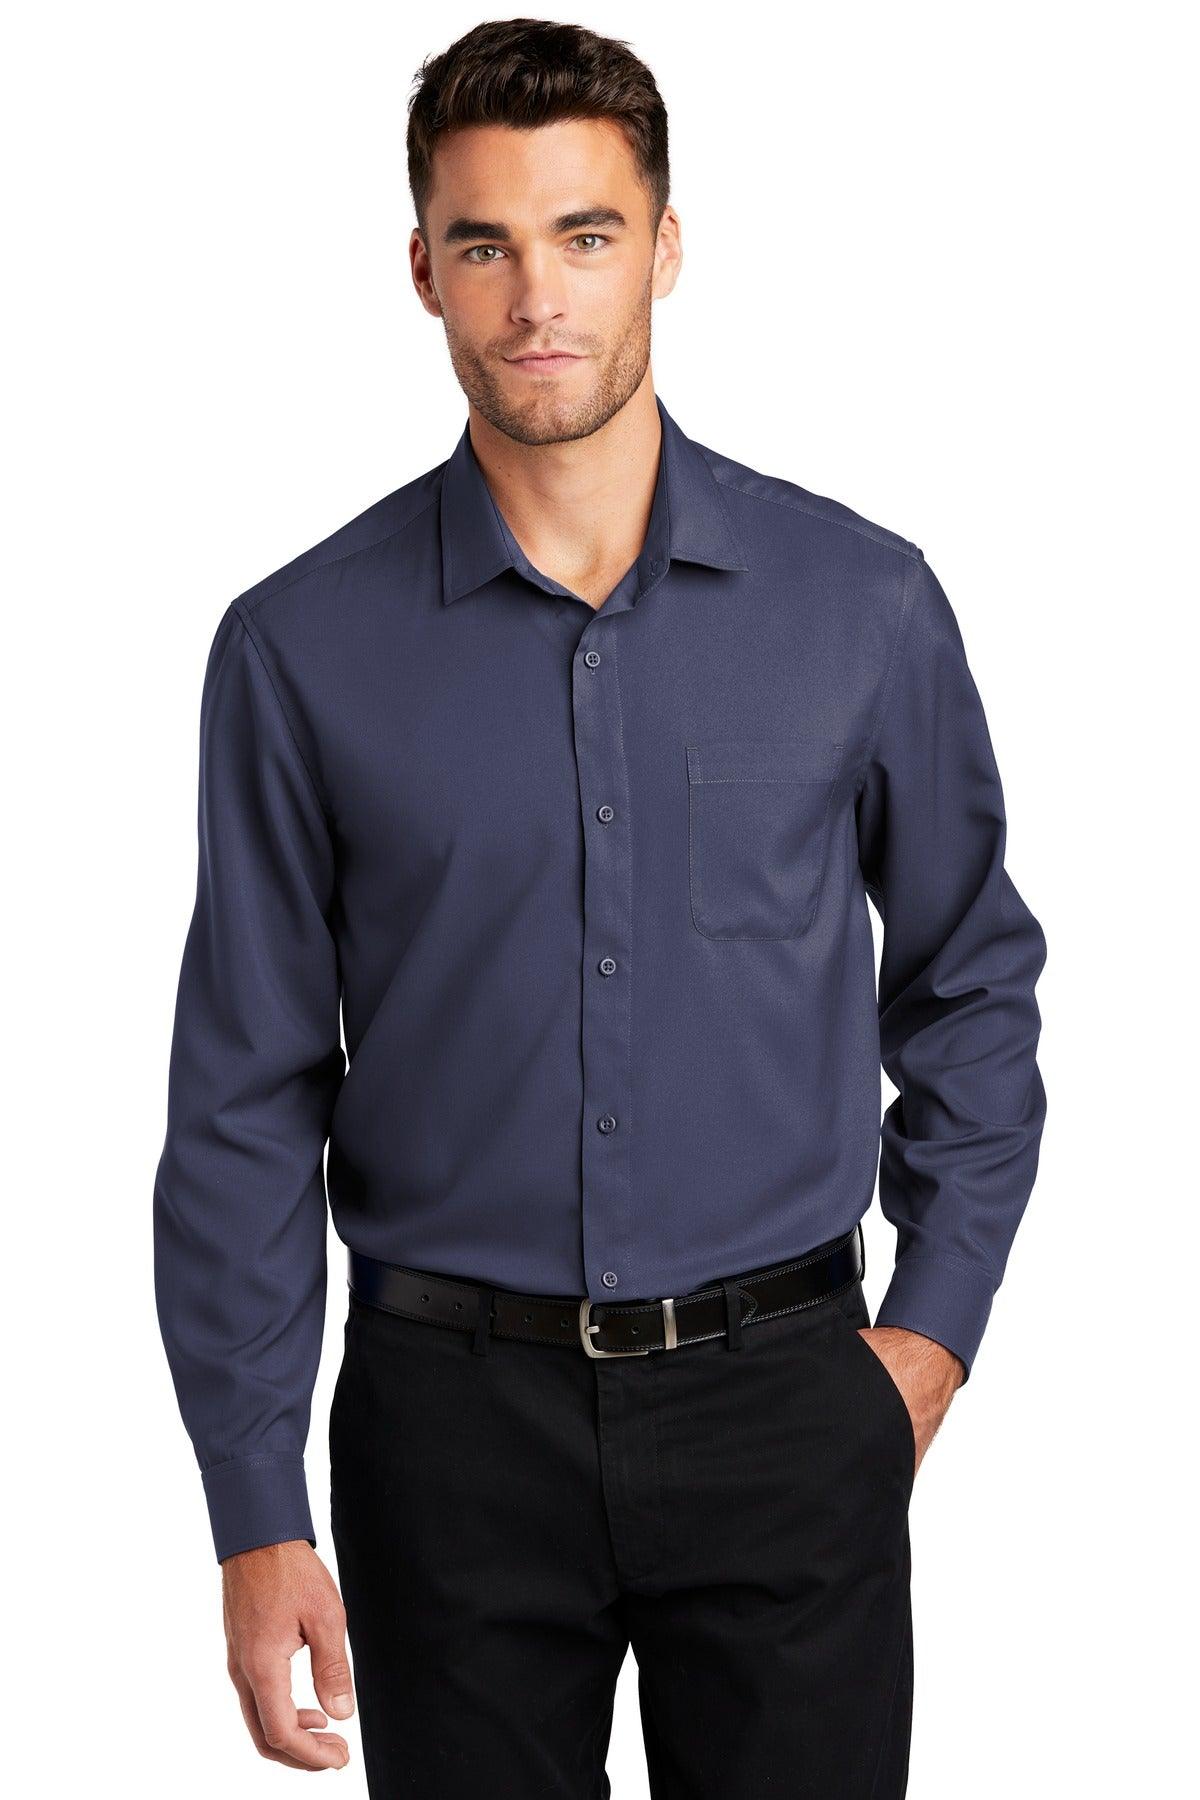 Port Authority Long Sleeve Performance Staff Shirt W401 - Dresses Max